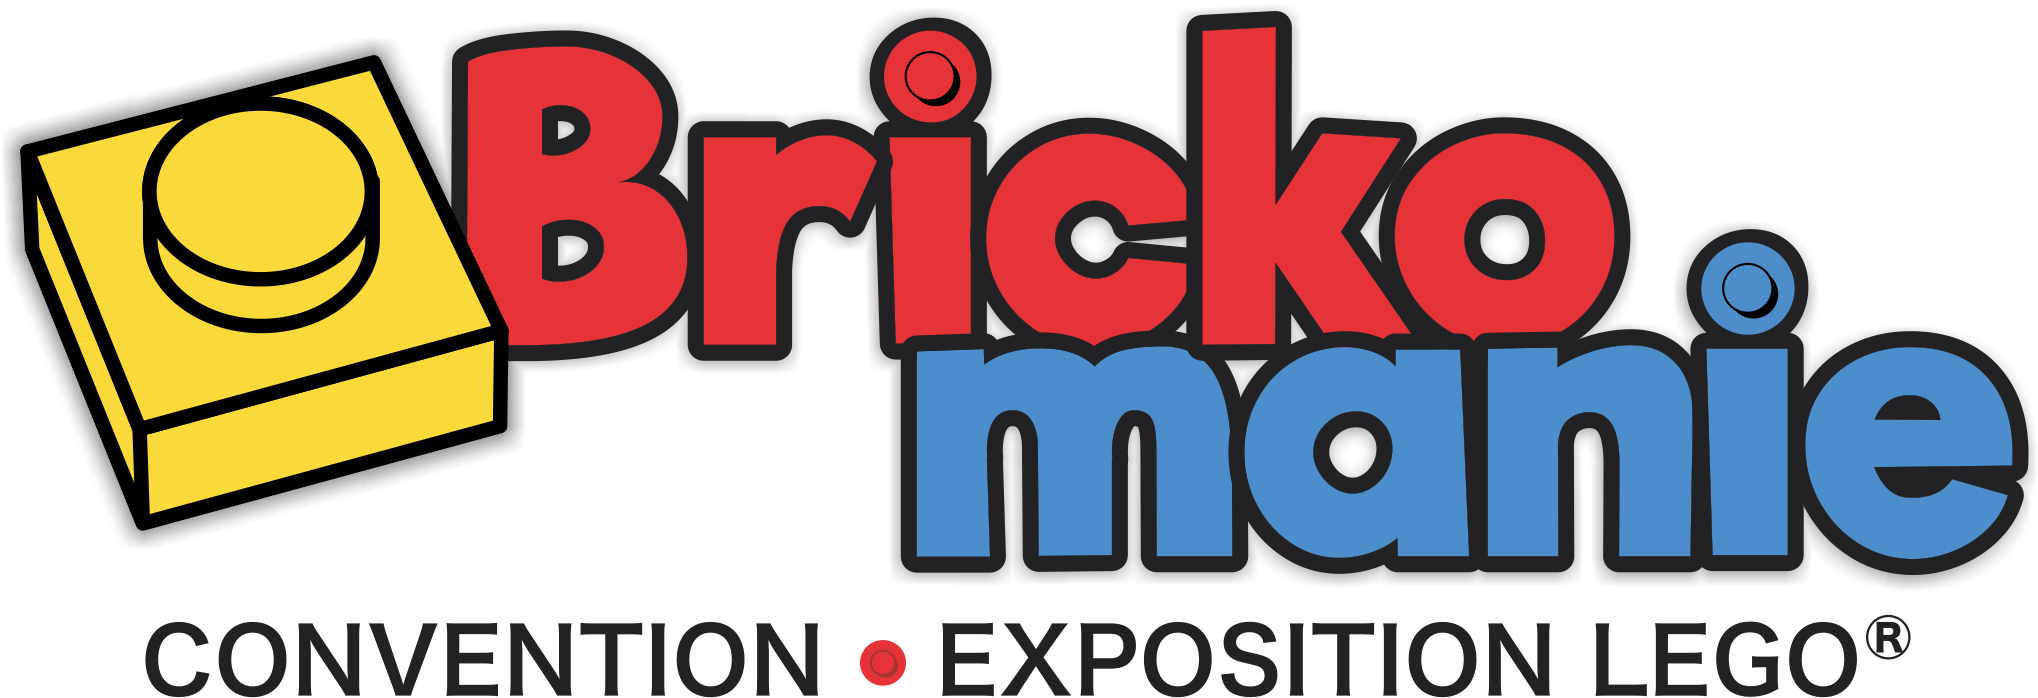 Brickomanie - Convention and LEGO® Exhibition